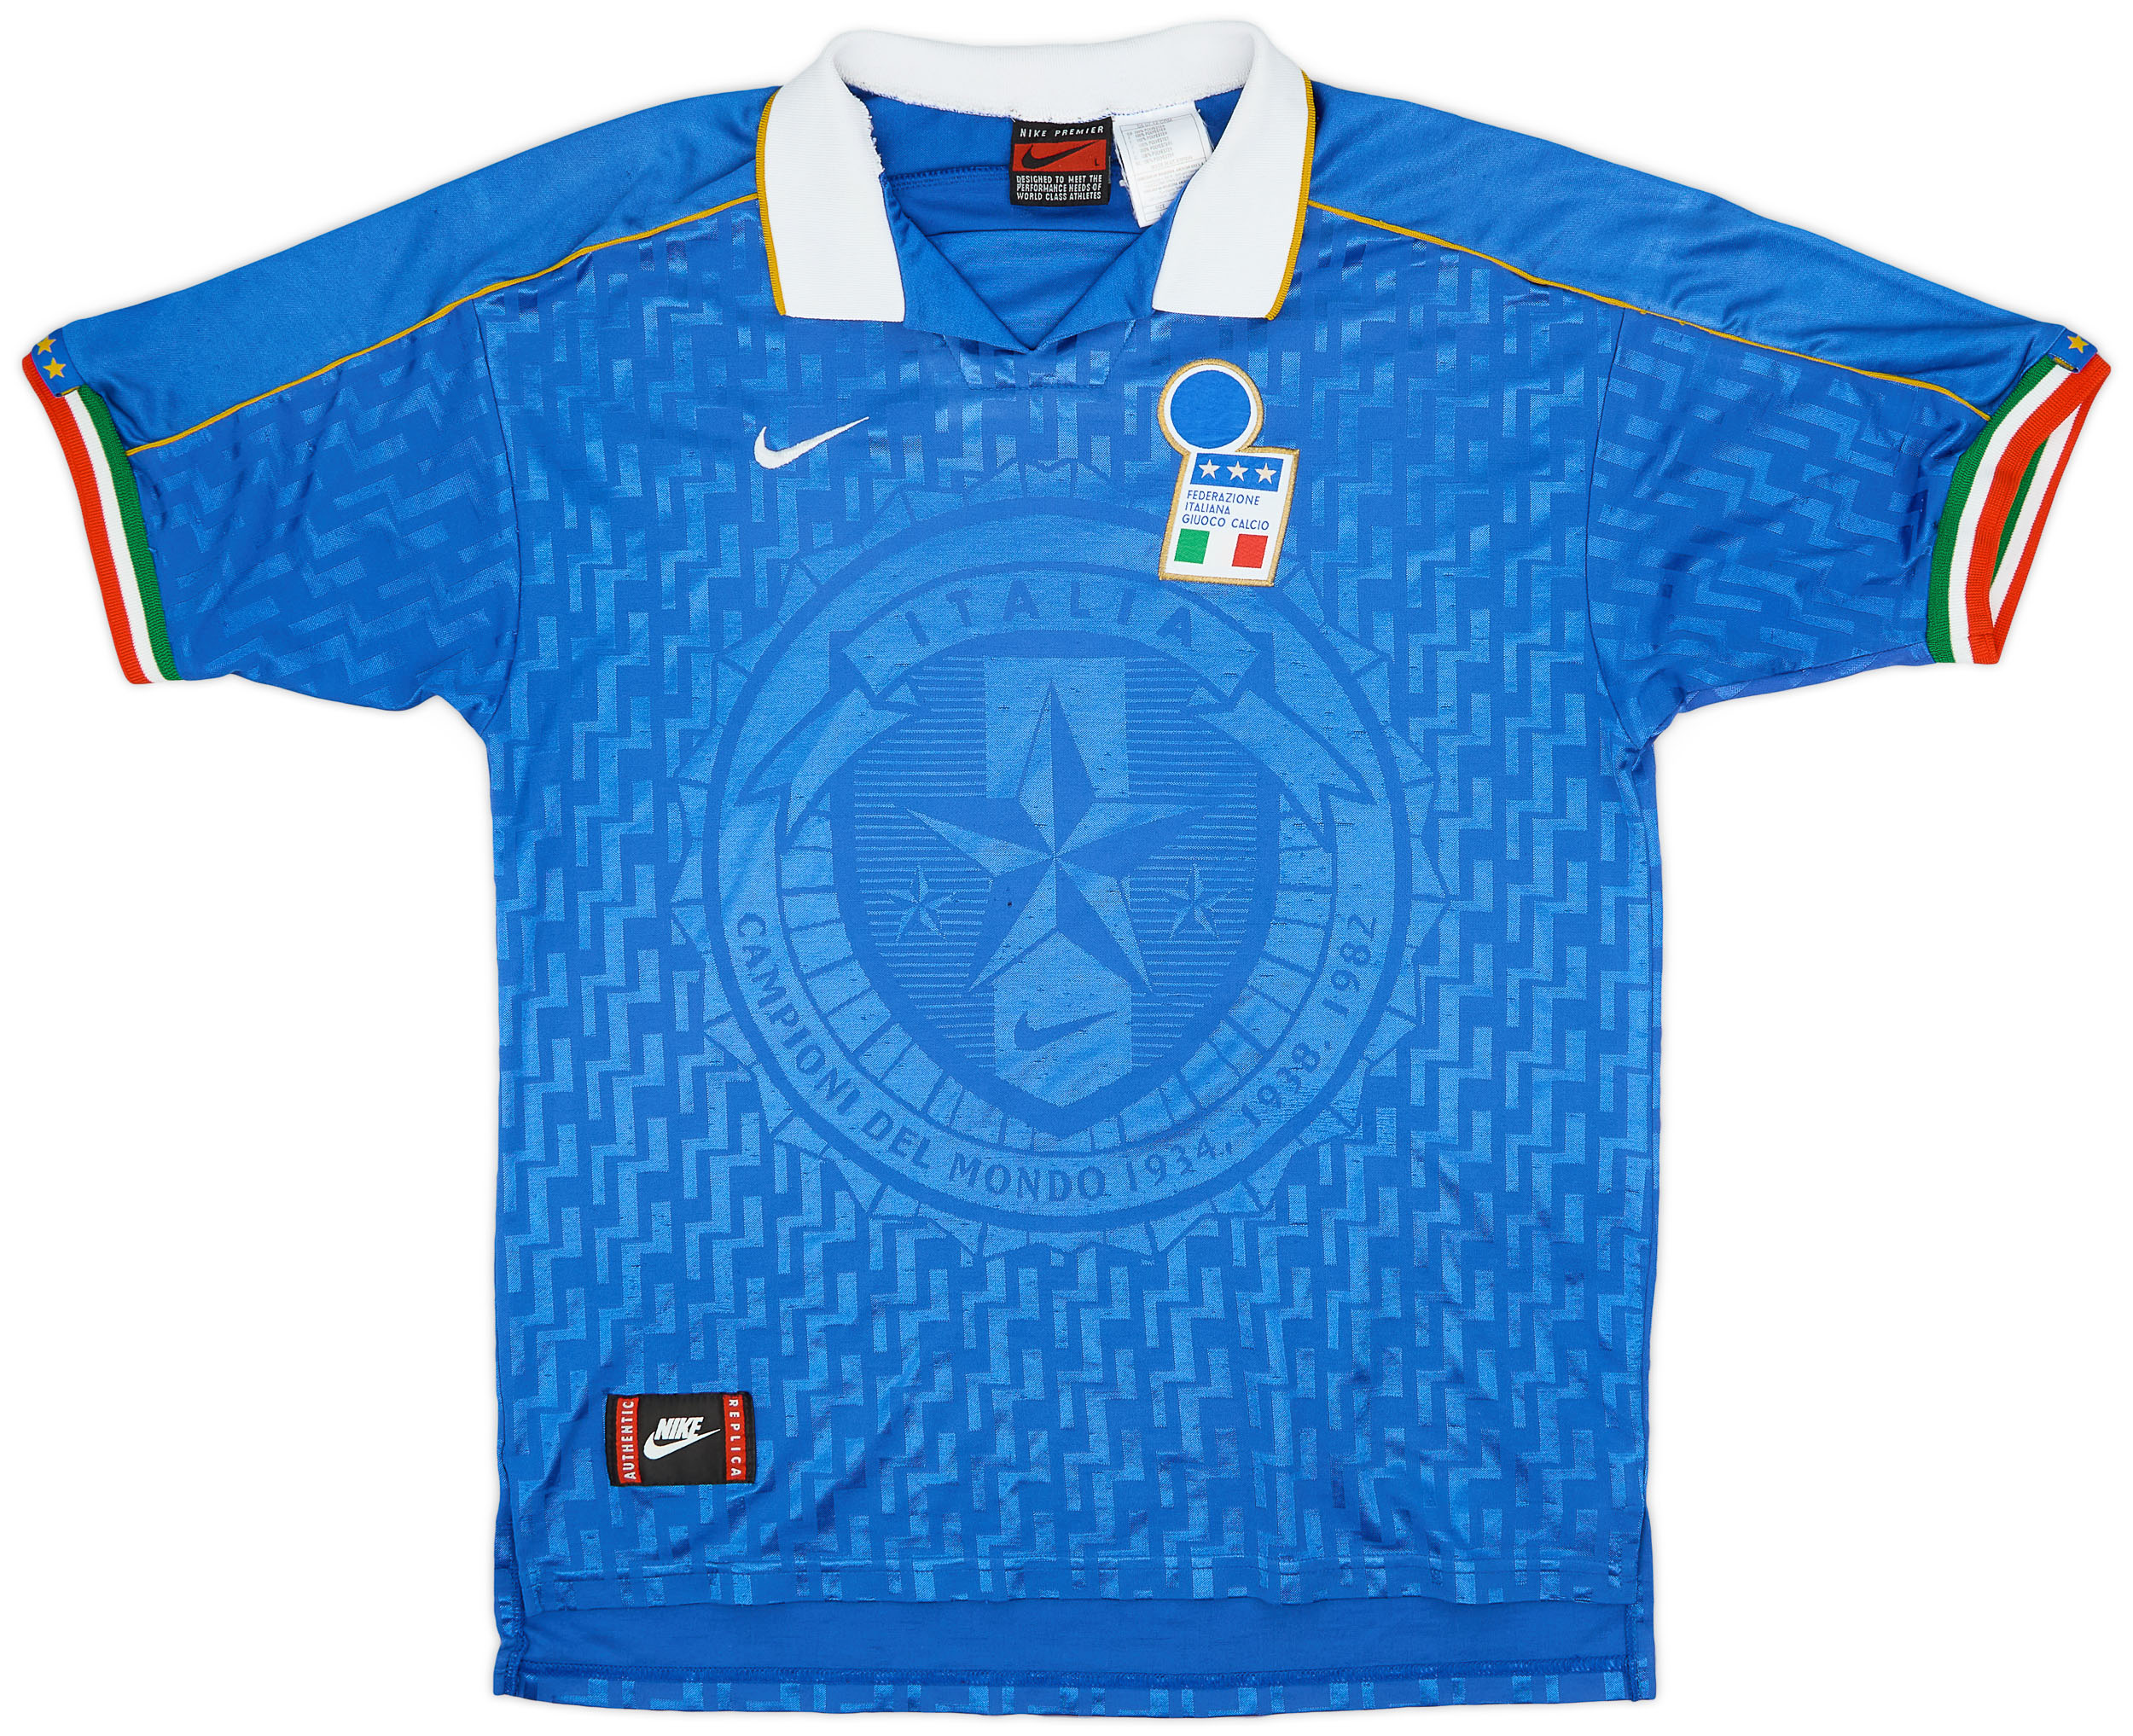 1994-96 Italy Home Shirt - 6/10 - ()